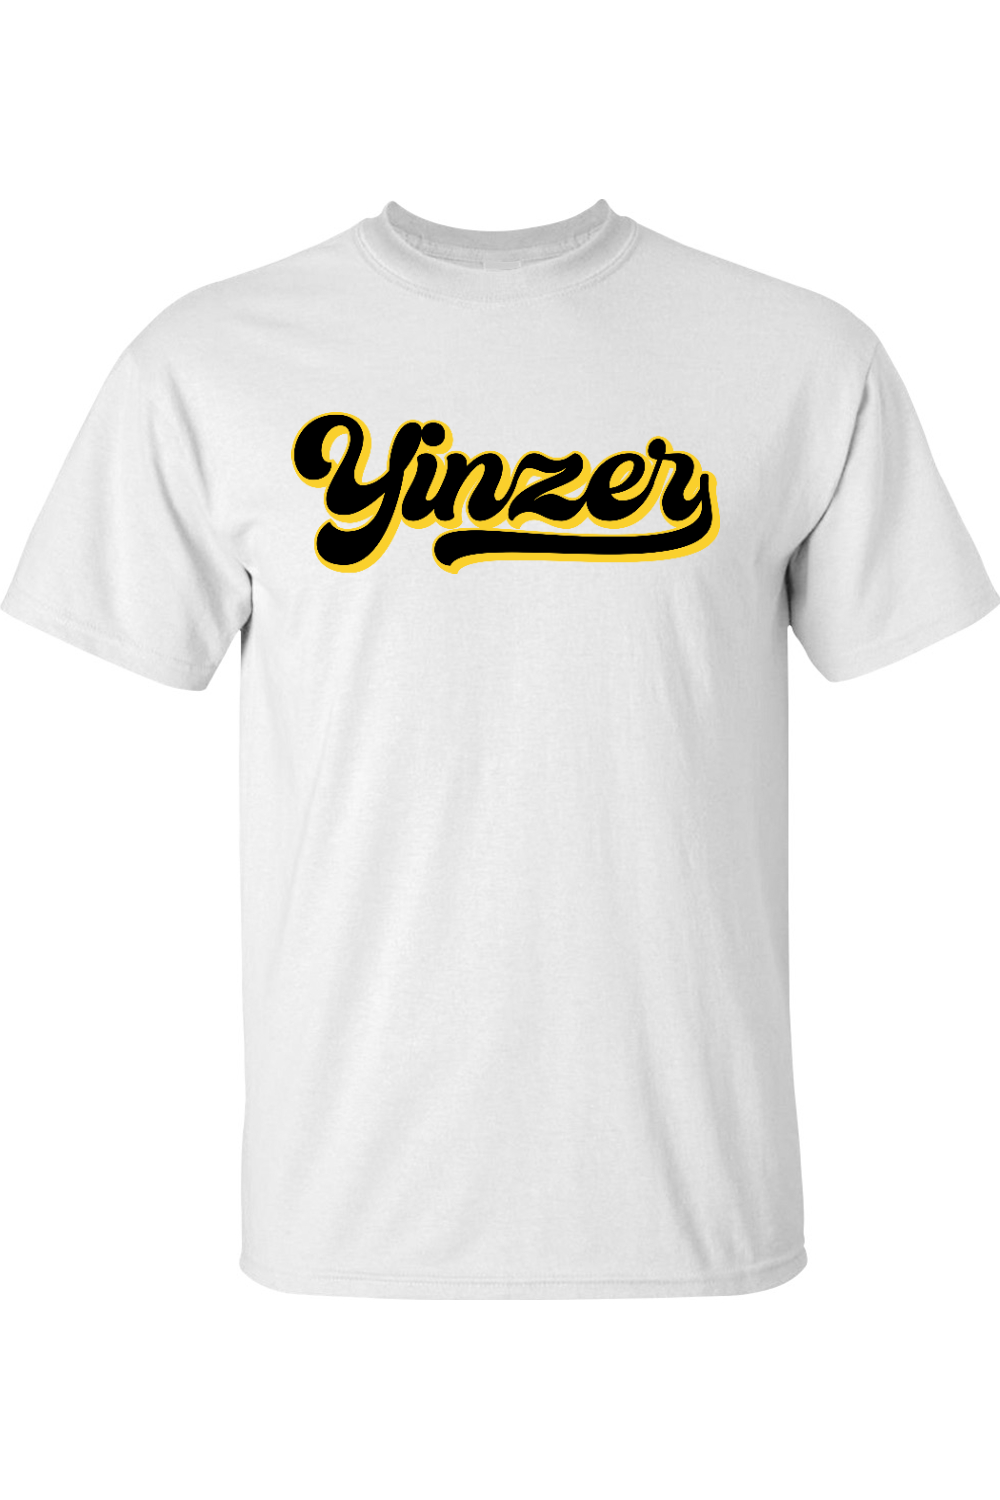 Yinzer - Big & Tall - Gildan Heavy Cotton T-Shirt - Yinzylvania